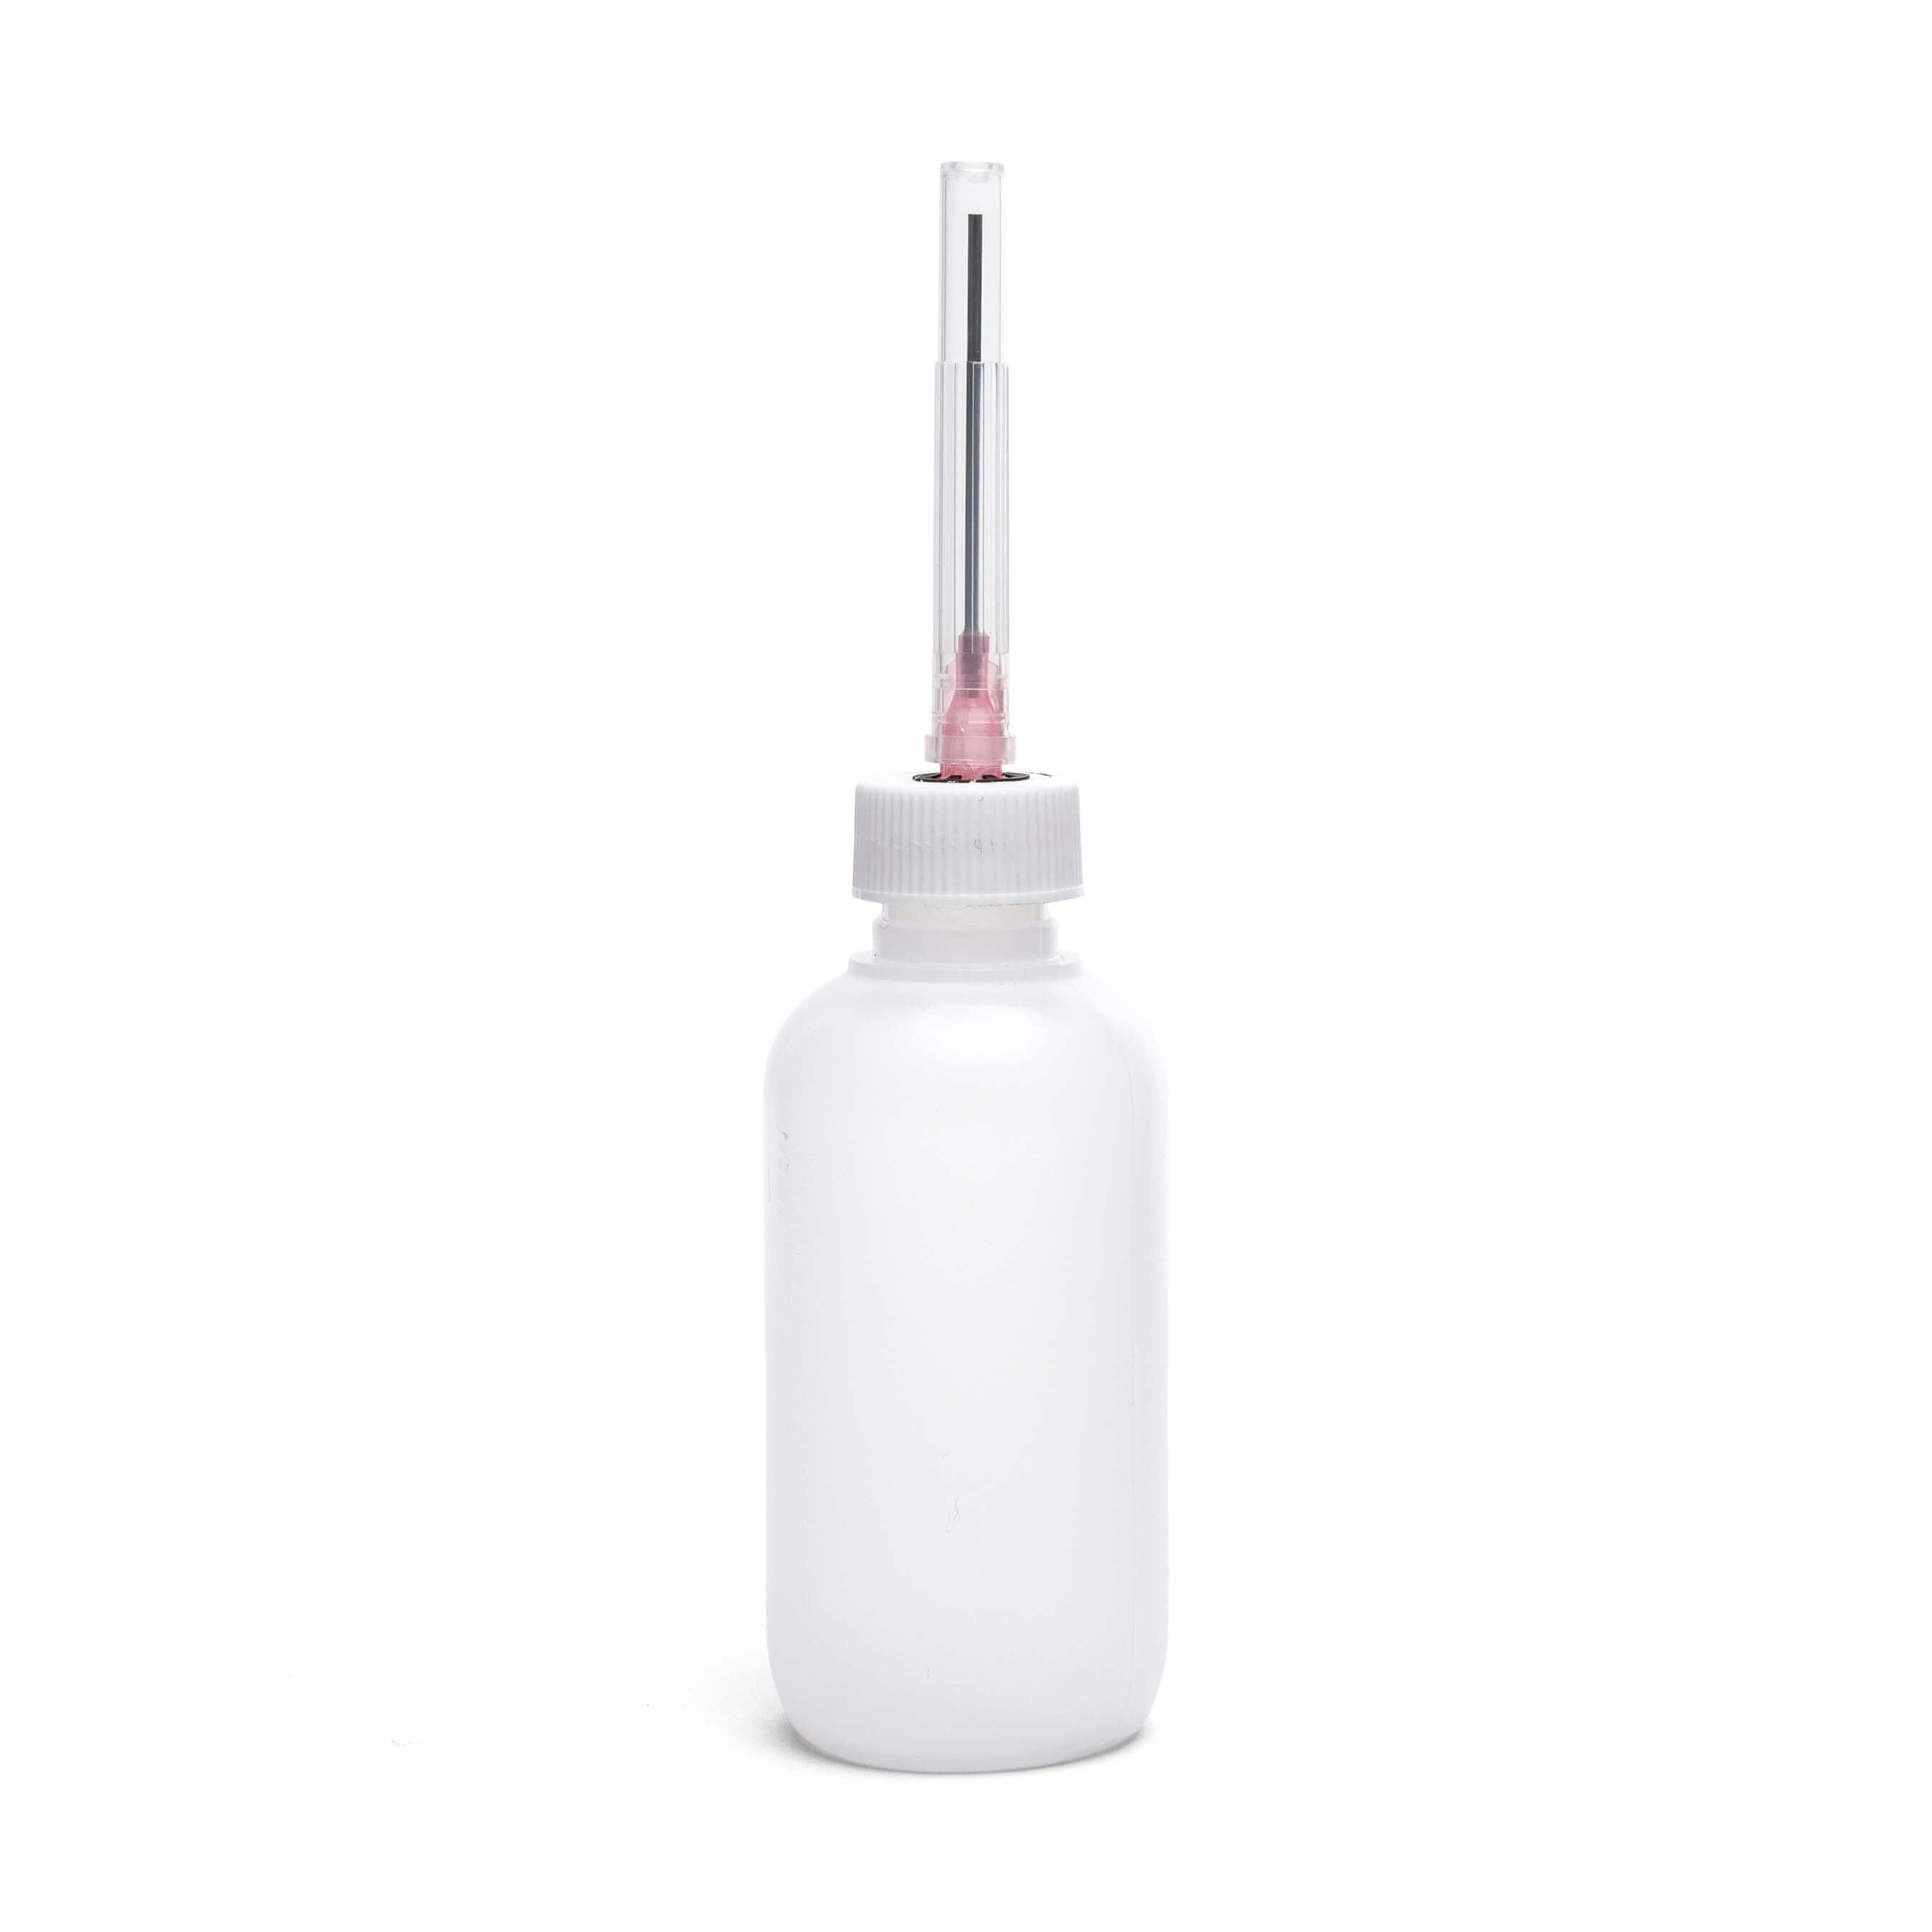 Applicator Bottle Squeeze Dispensers - Round Bottle - 18ga x 1-1/2 Needle